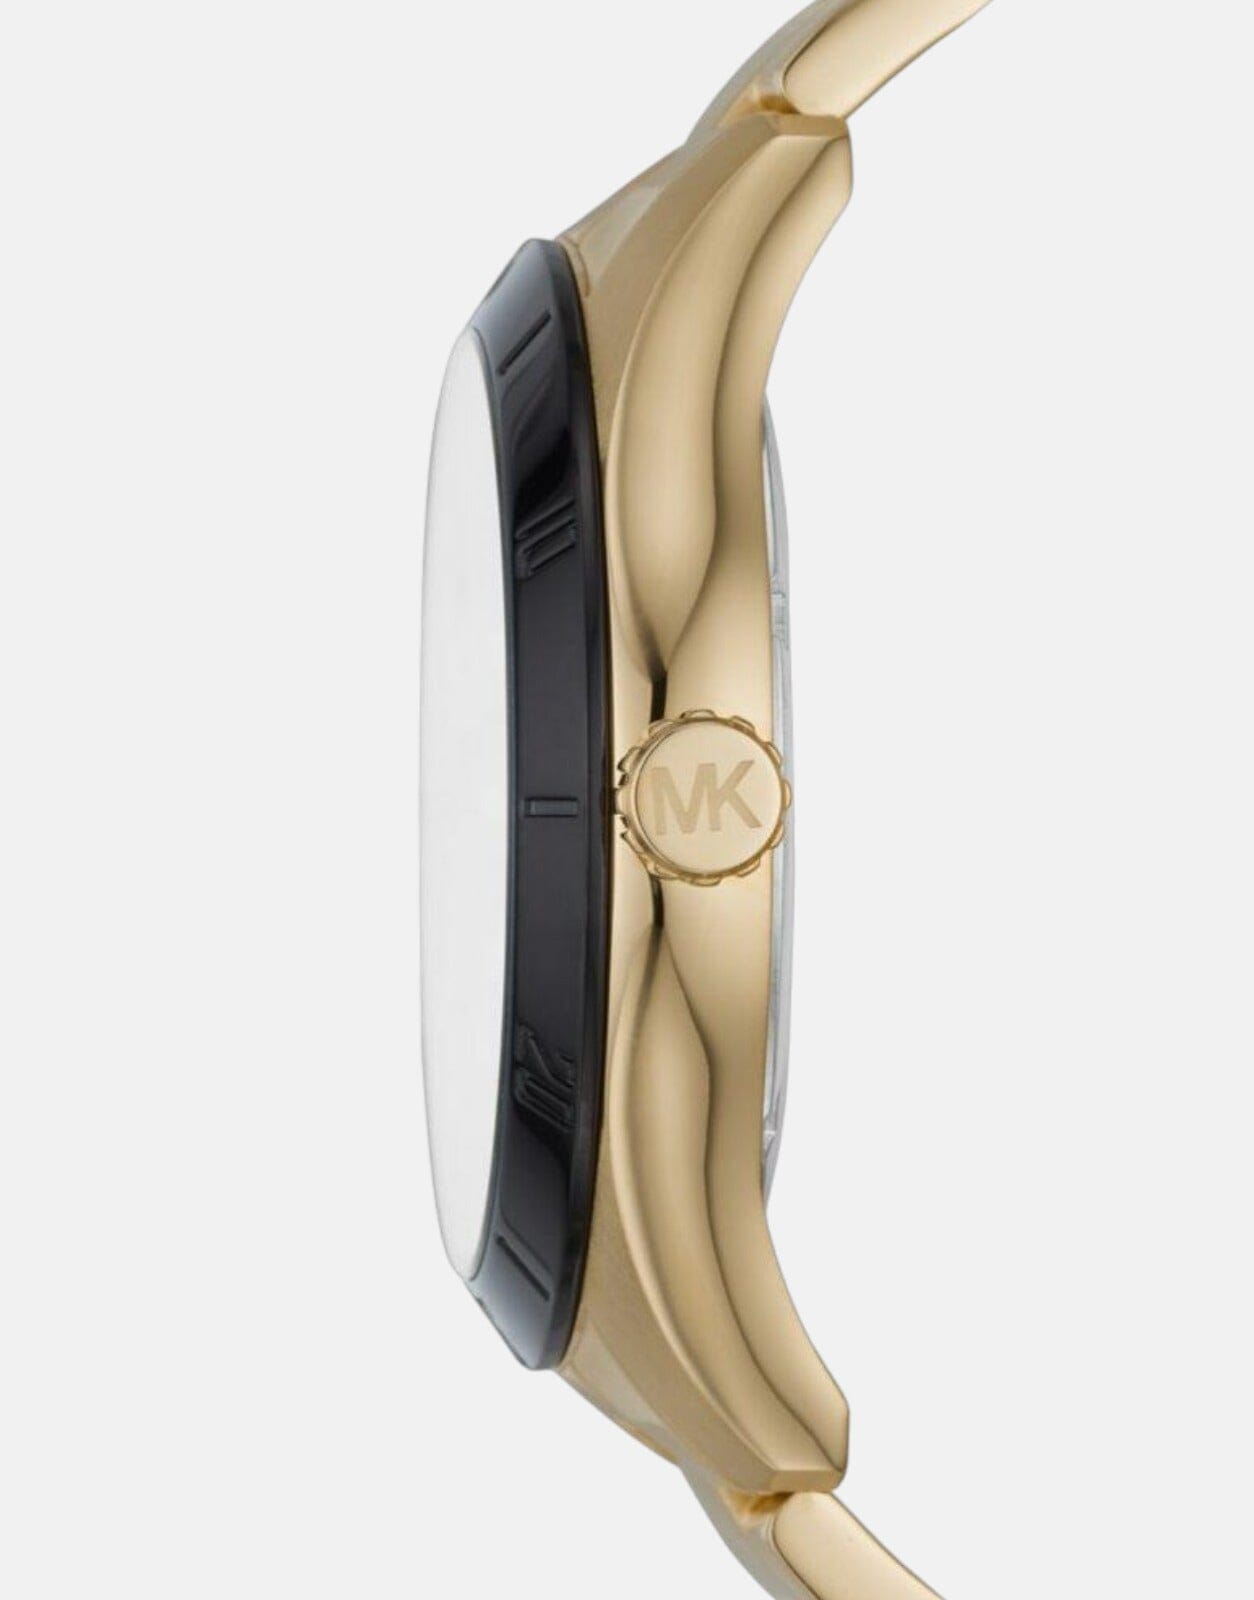 Michael Kors Layton Gold Stainless Steel Watch - Subwear